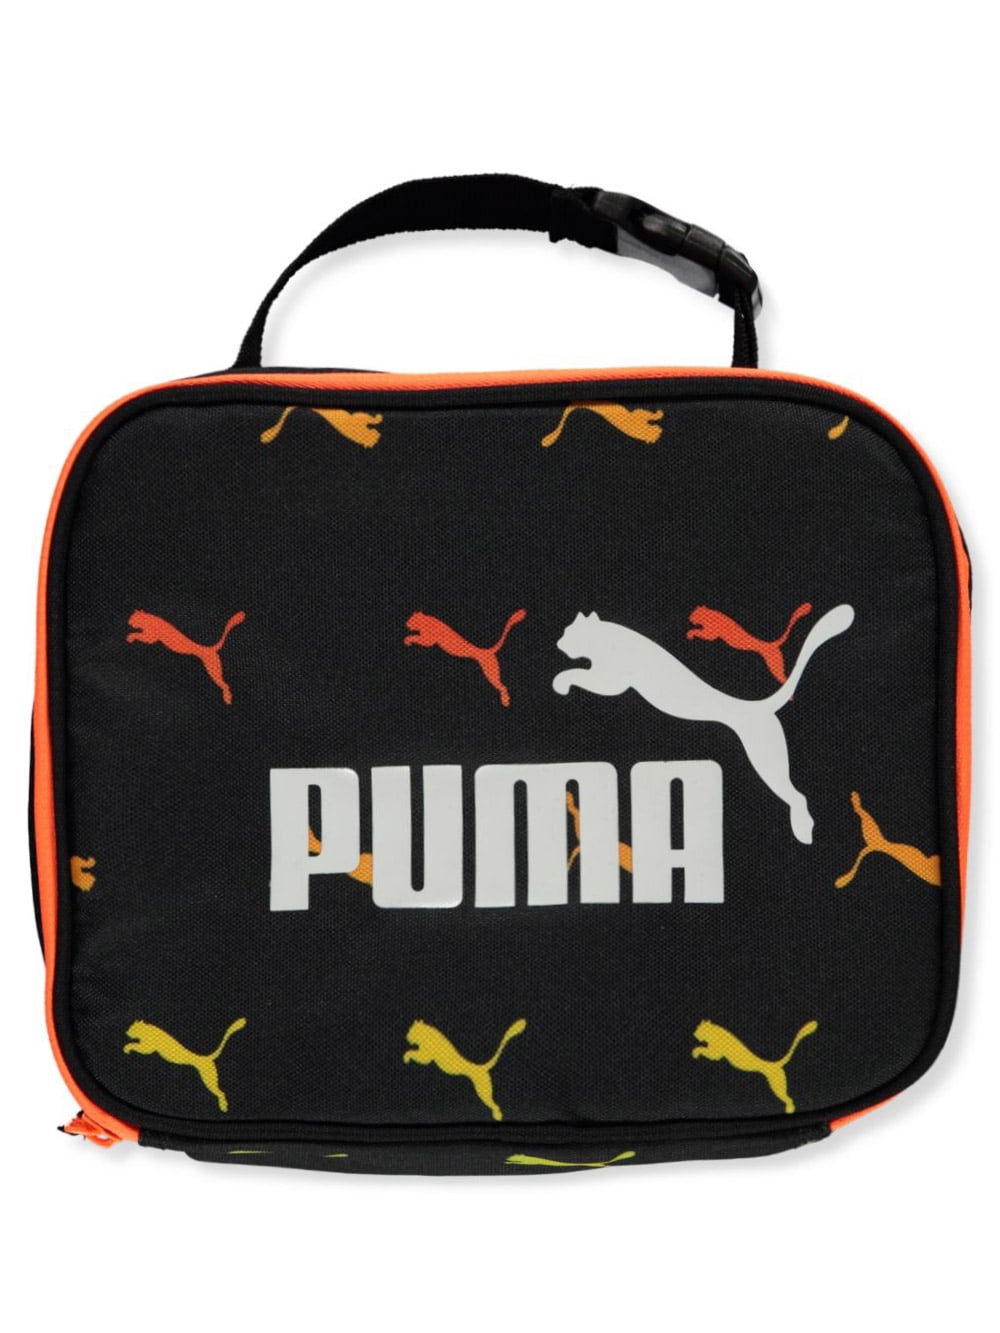 Puma Pro MVP Lunch Box – Black/Grey – One Size